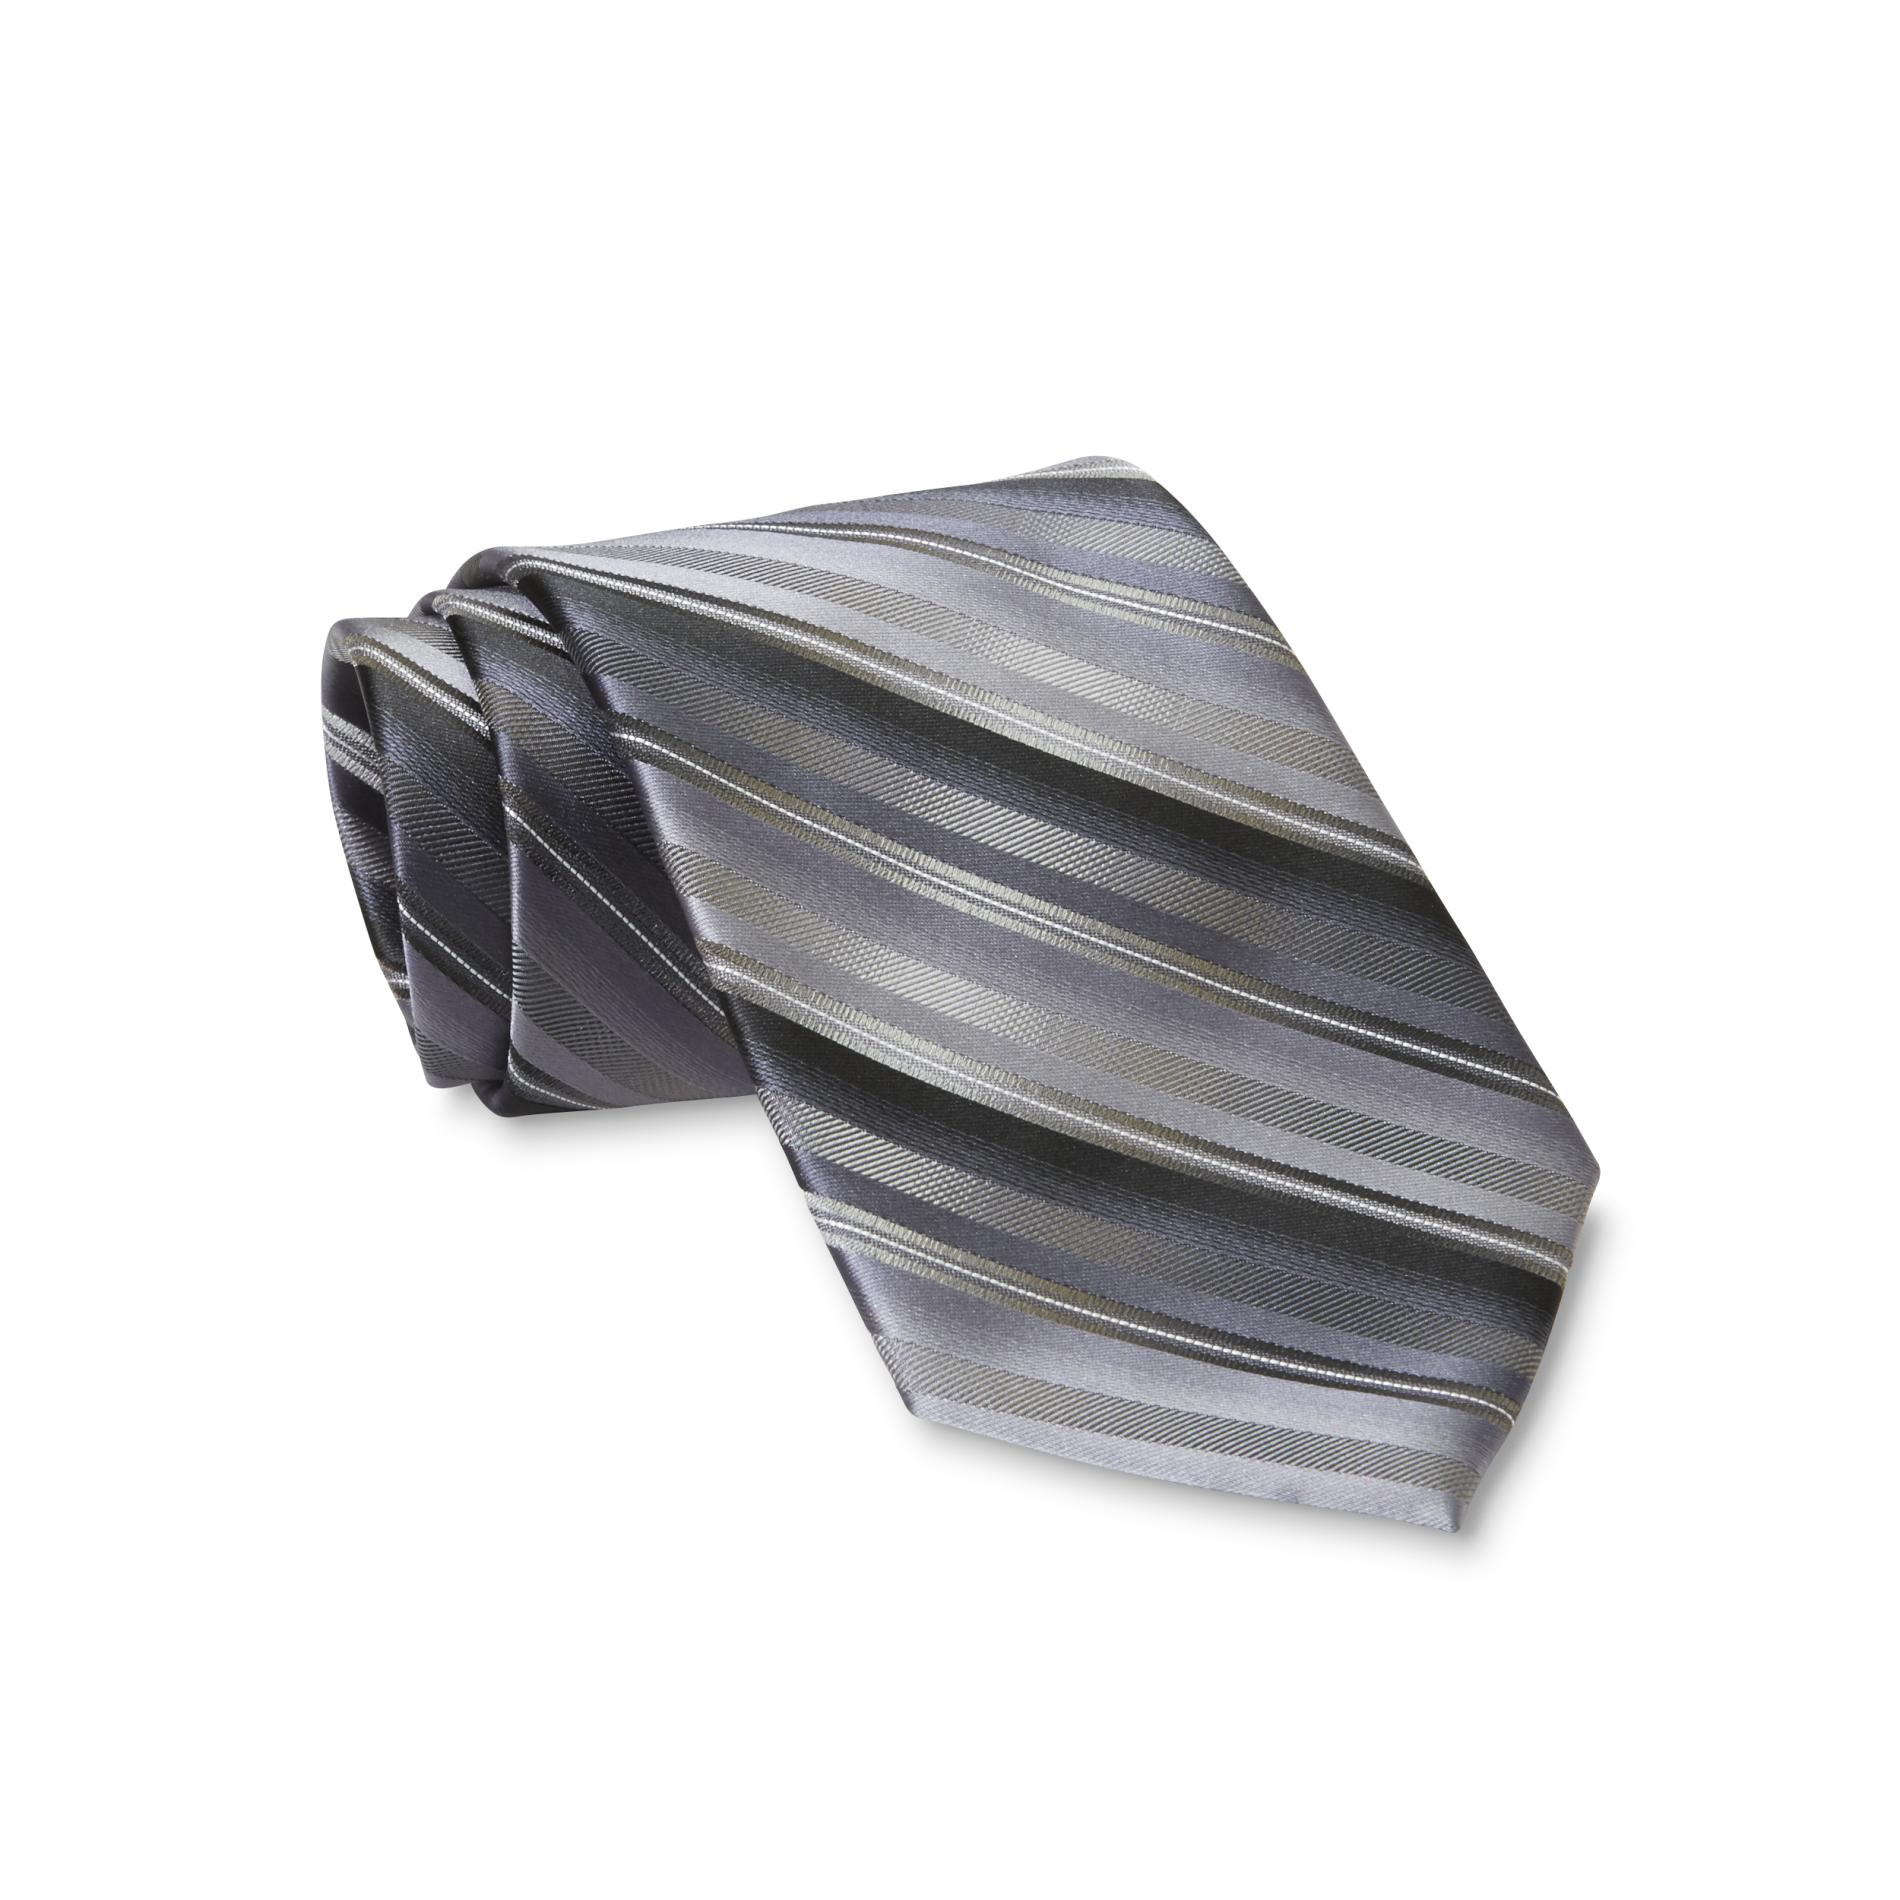 Arrow Men's Necktie - Striped